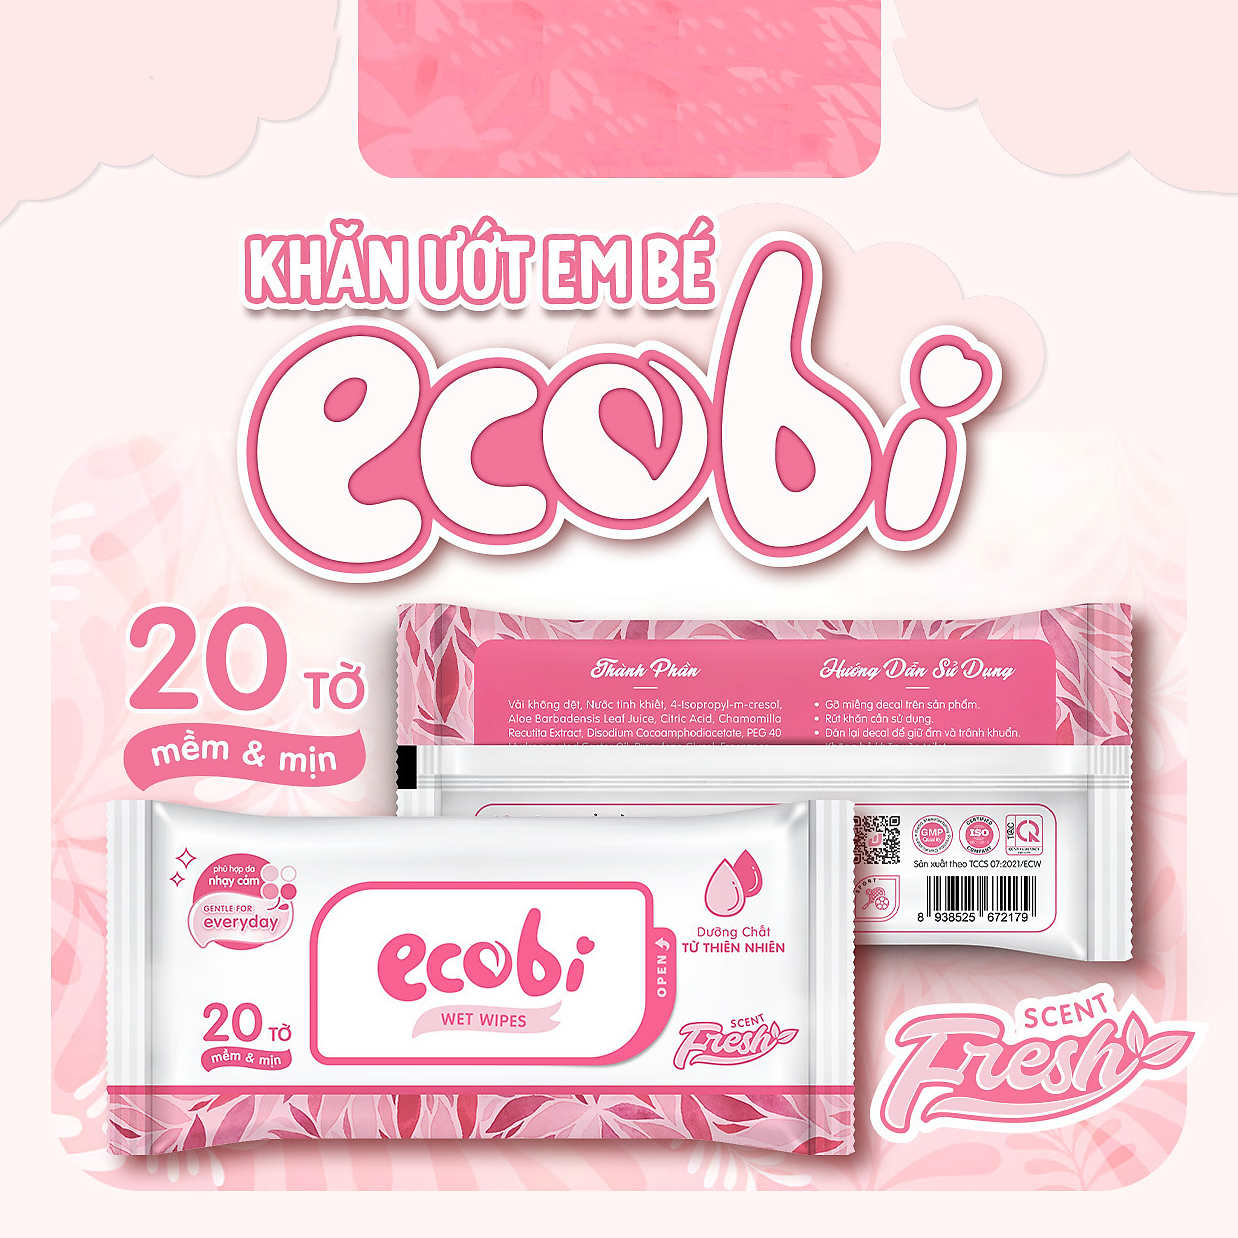 khan uot cho be Ecobi Ecowipes